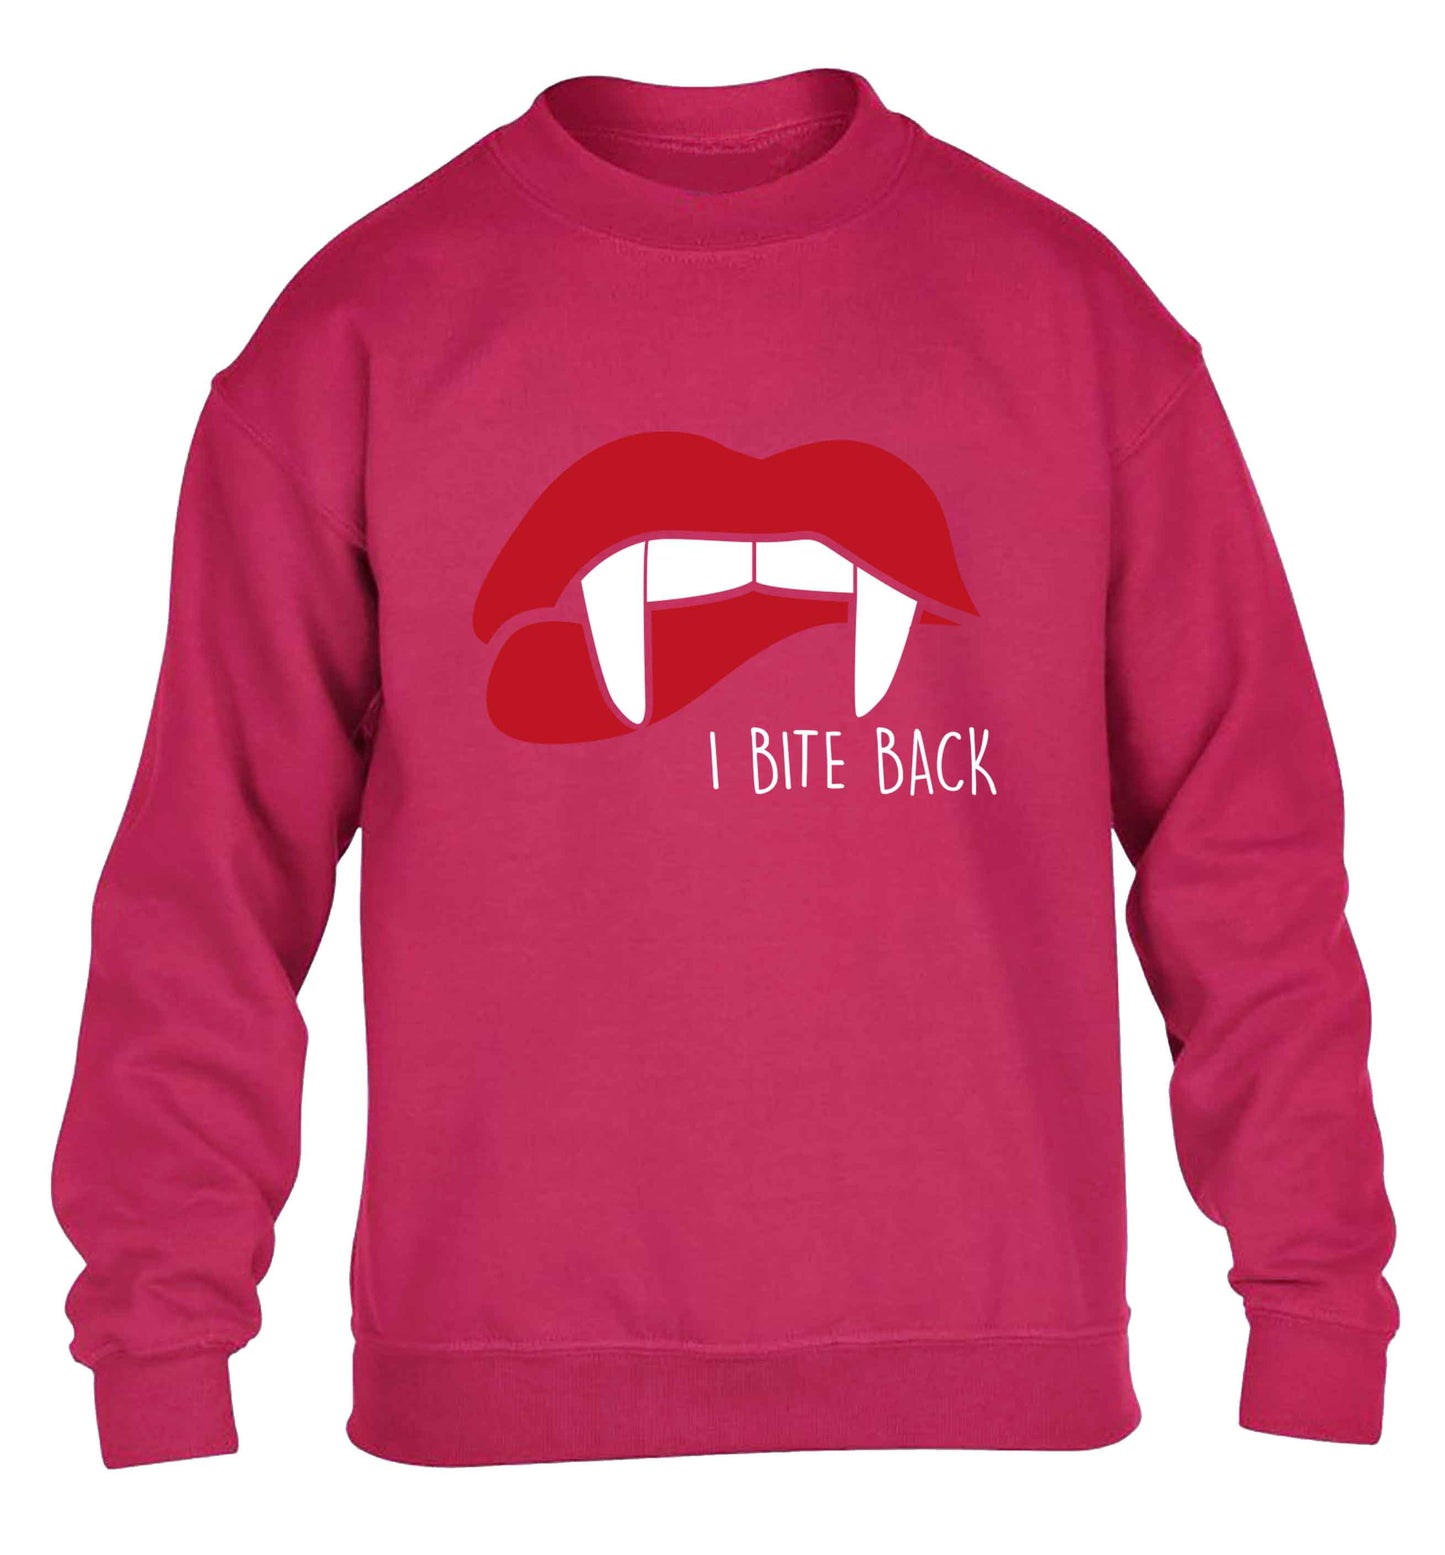 I bite back children's pink sweater 12-13 Years